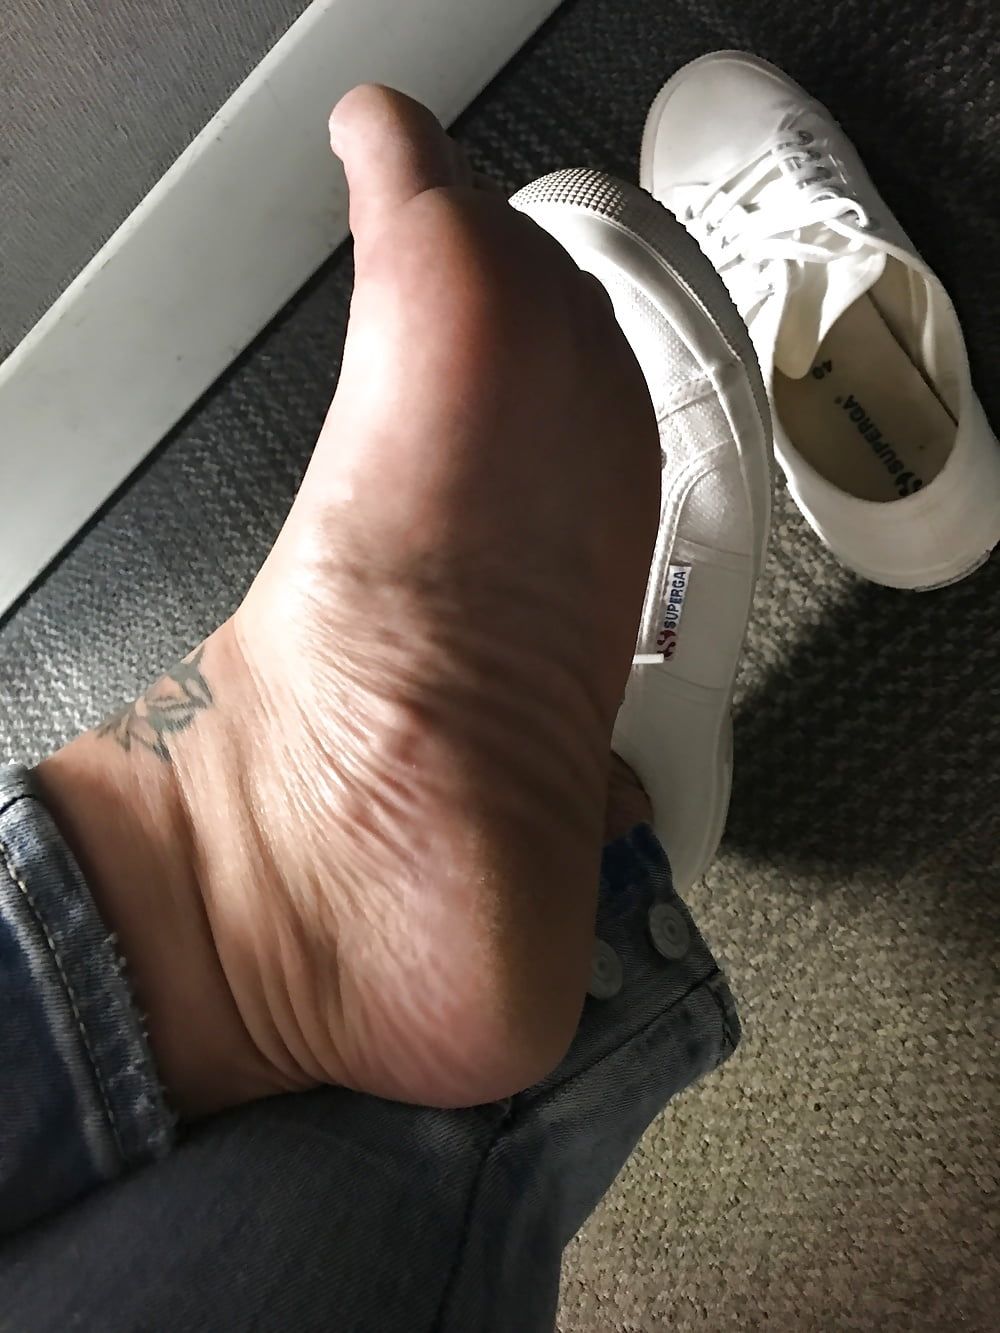 Foot fetish #2